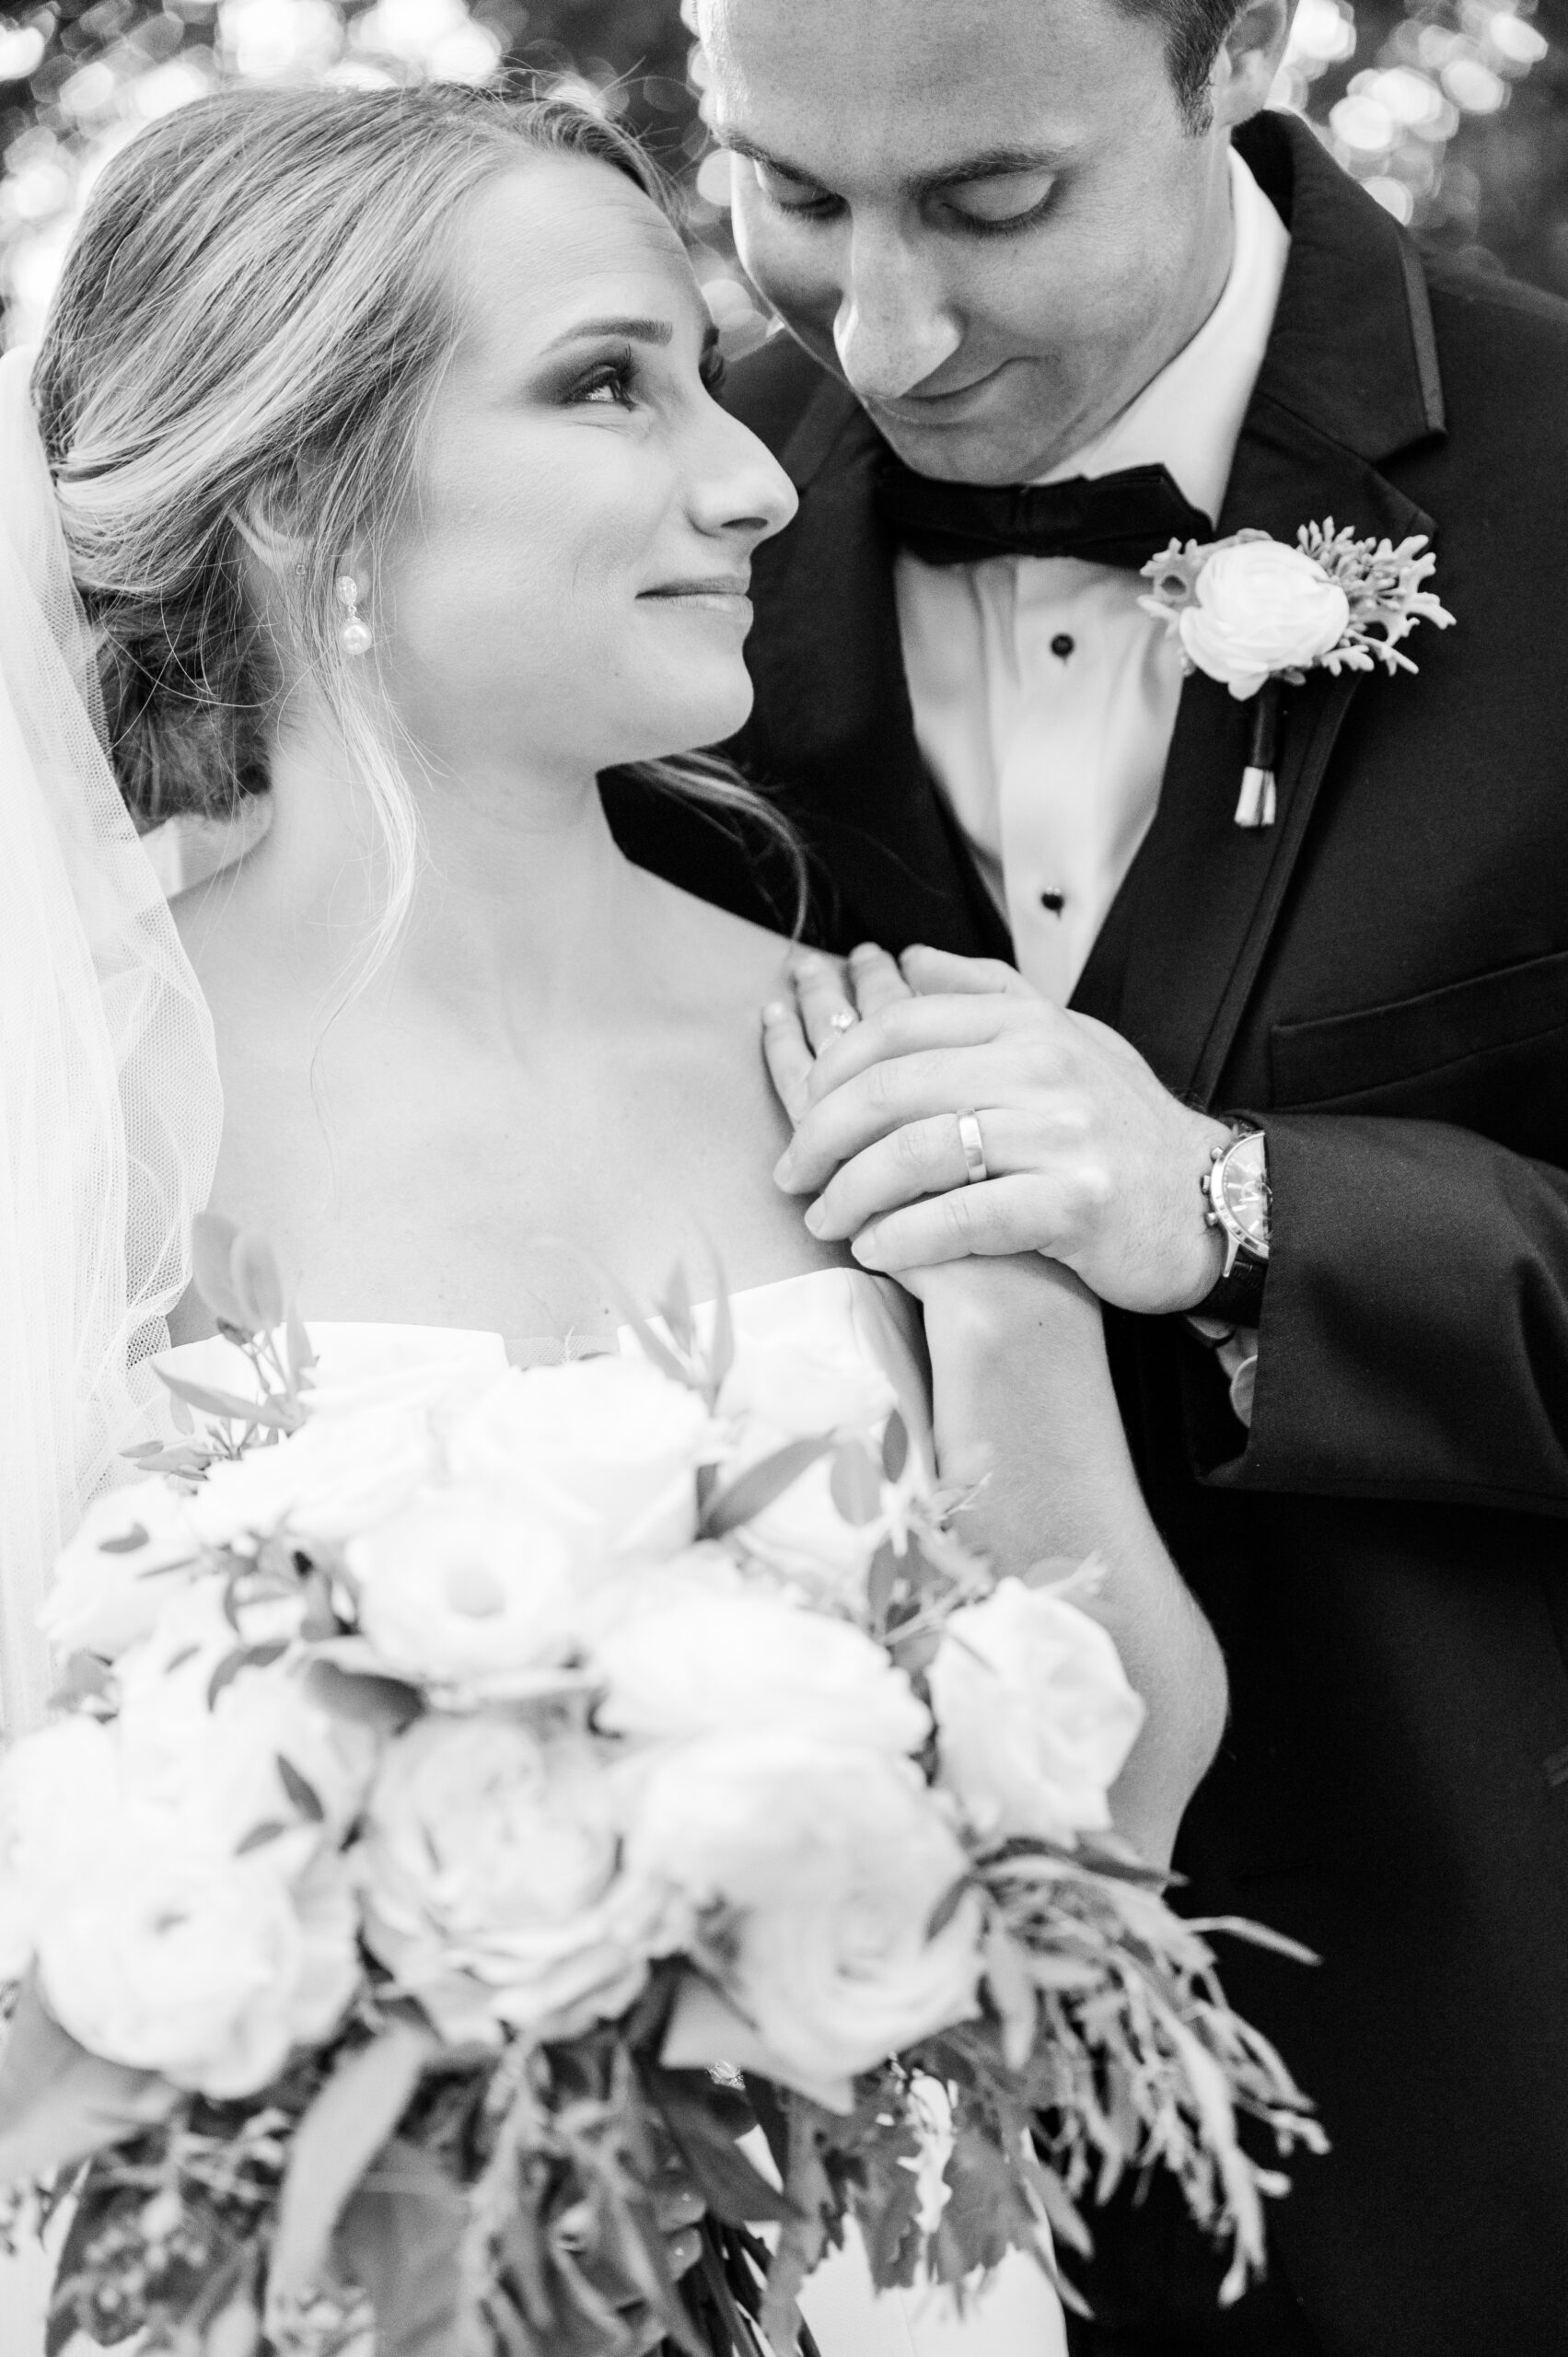 Best Wedding Venues In Nashville Tennessee - Rebecca Musayev Photography